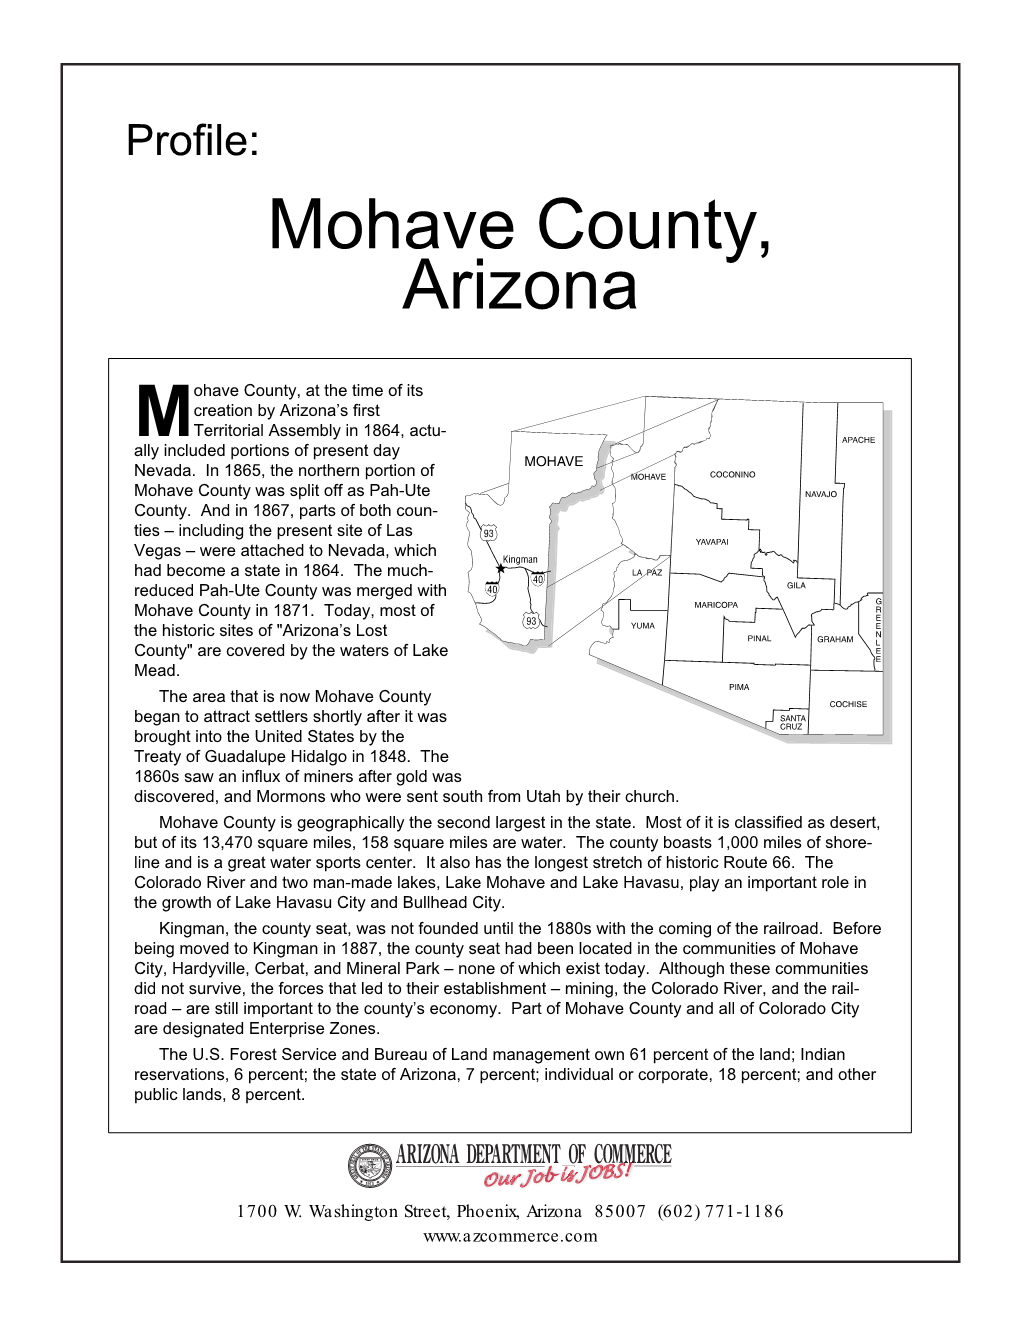 Mohave County, Arizona